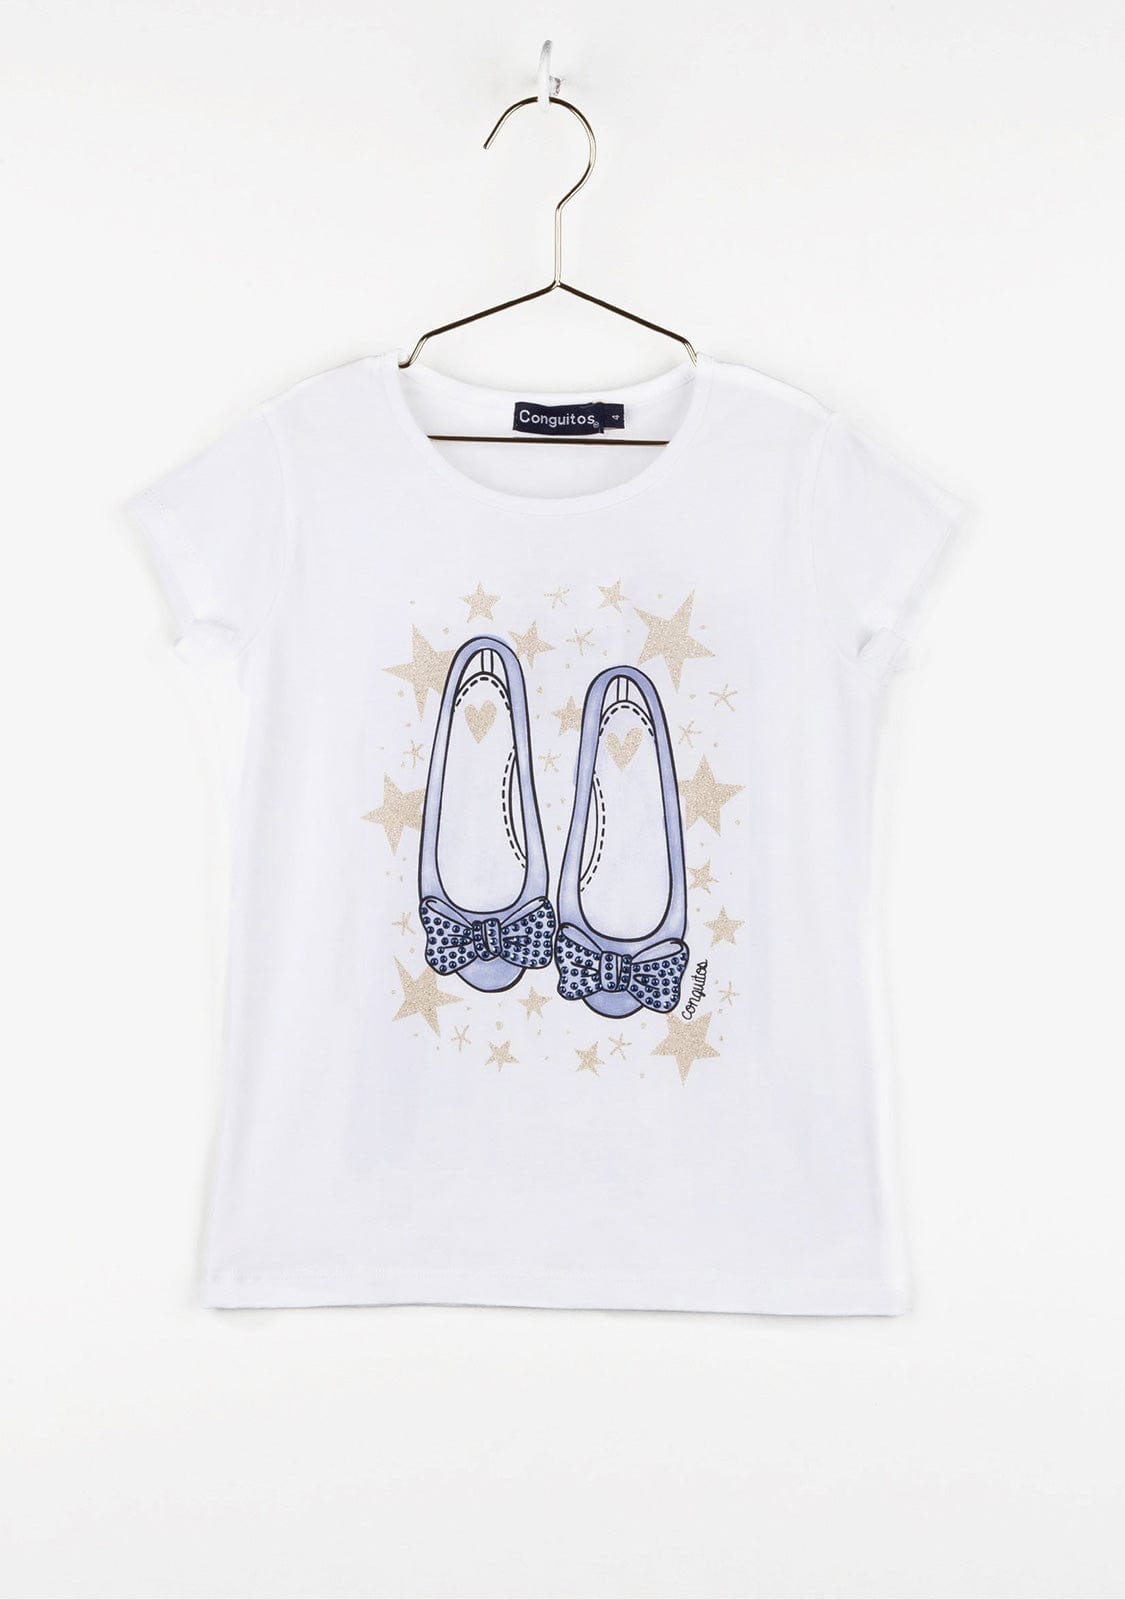 CONGUITOS TEXTIL Clothing Girl's "Ballerinas" Light Blue T-shirt